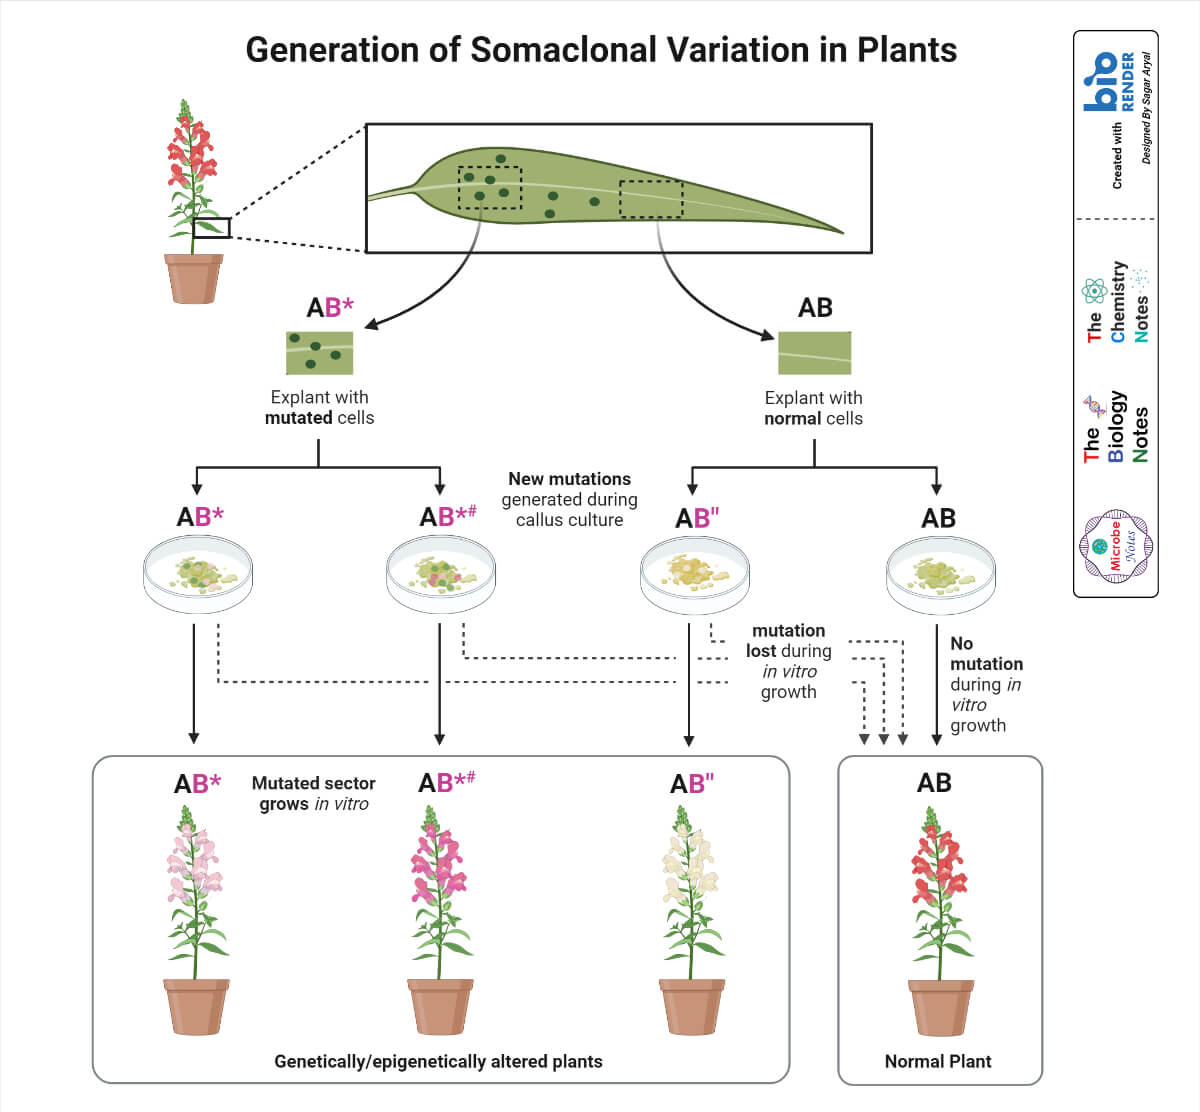 Generation of Somaclonal Variation in Plants